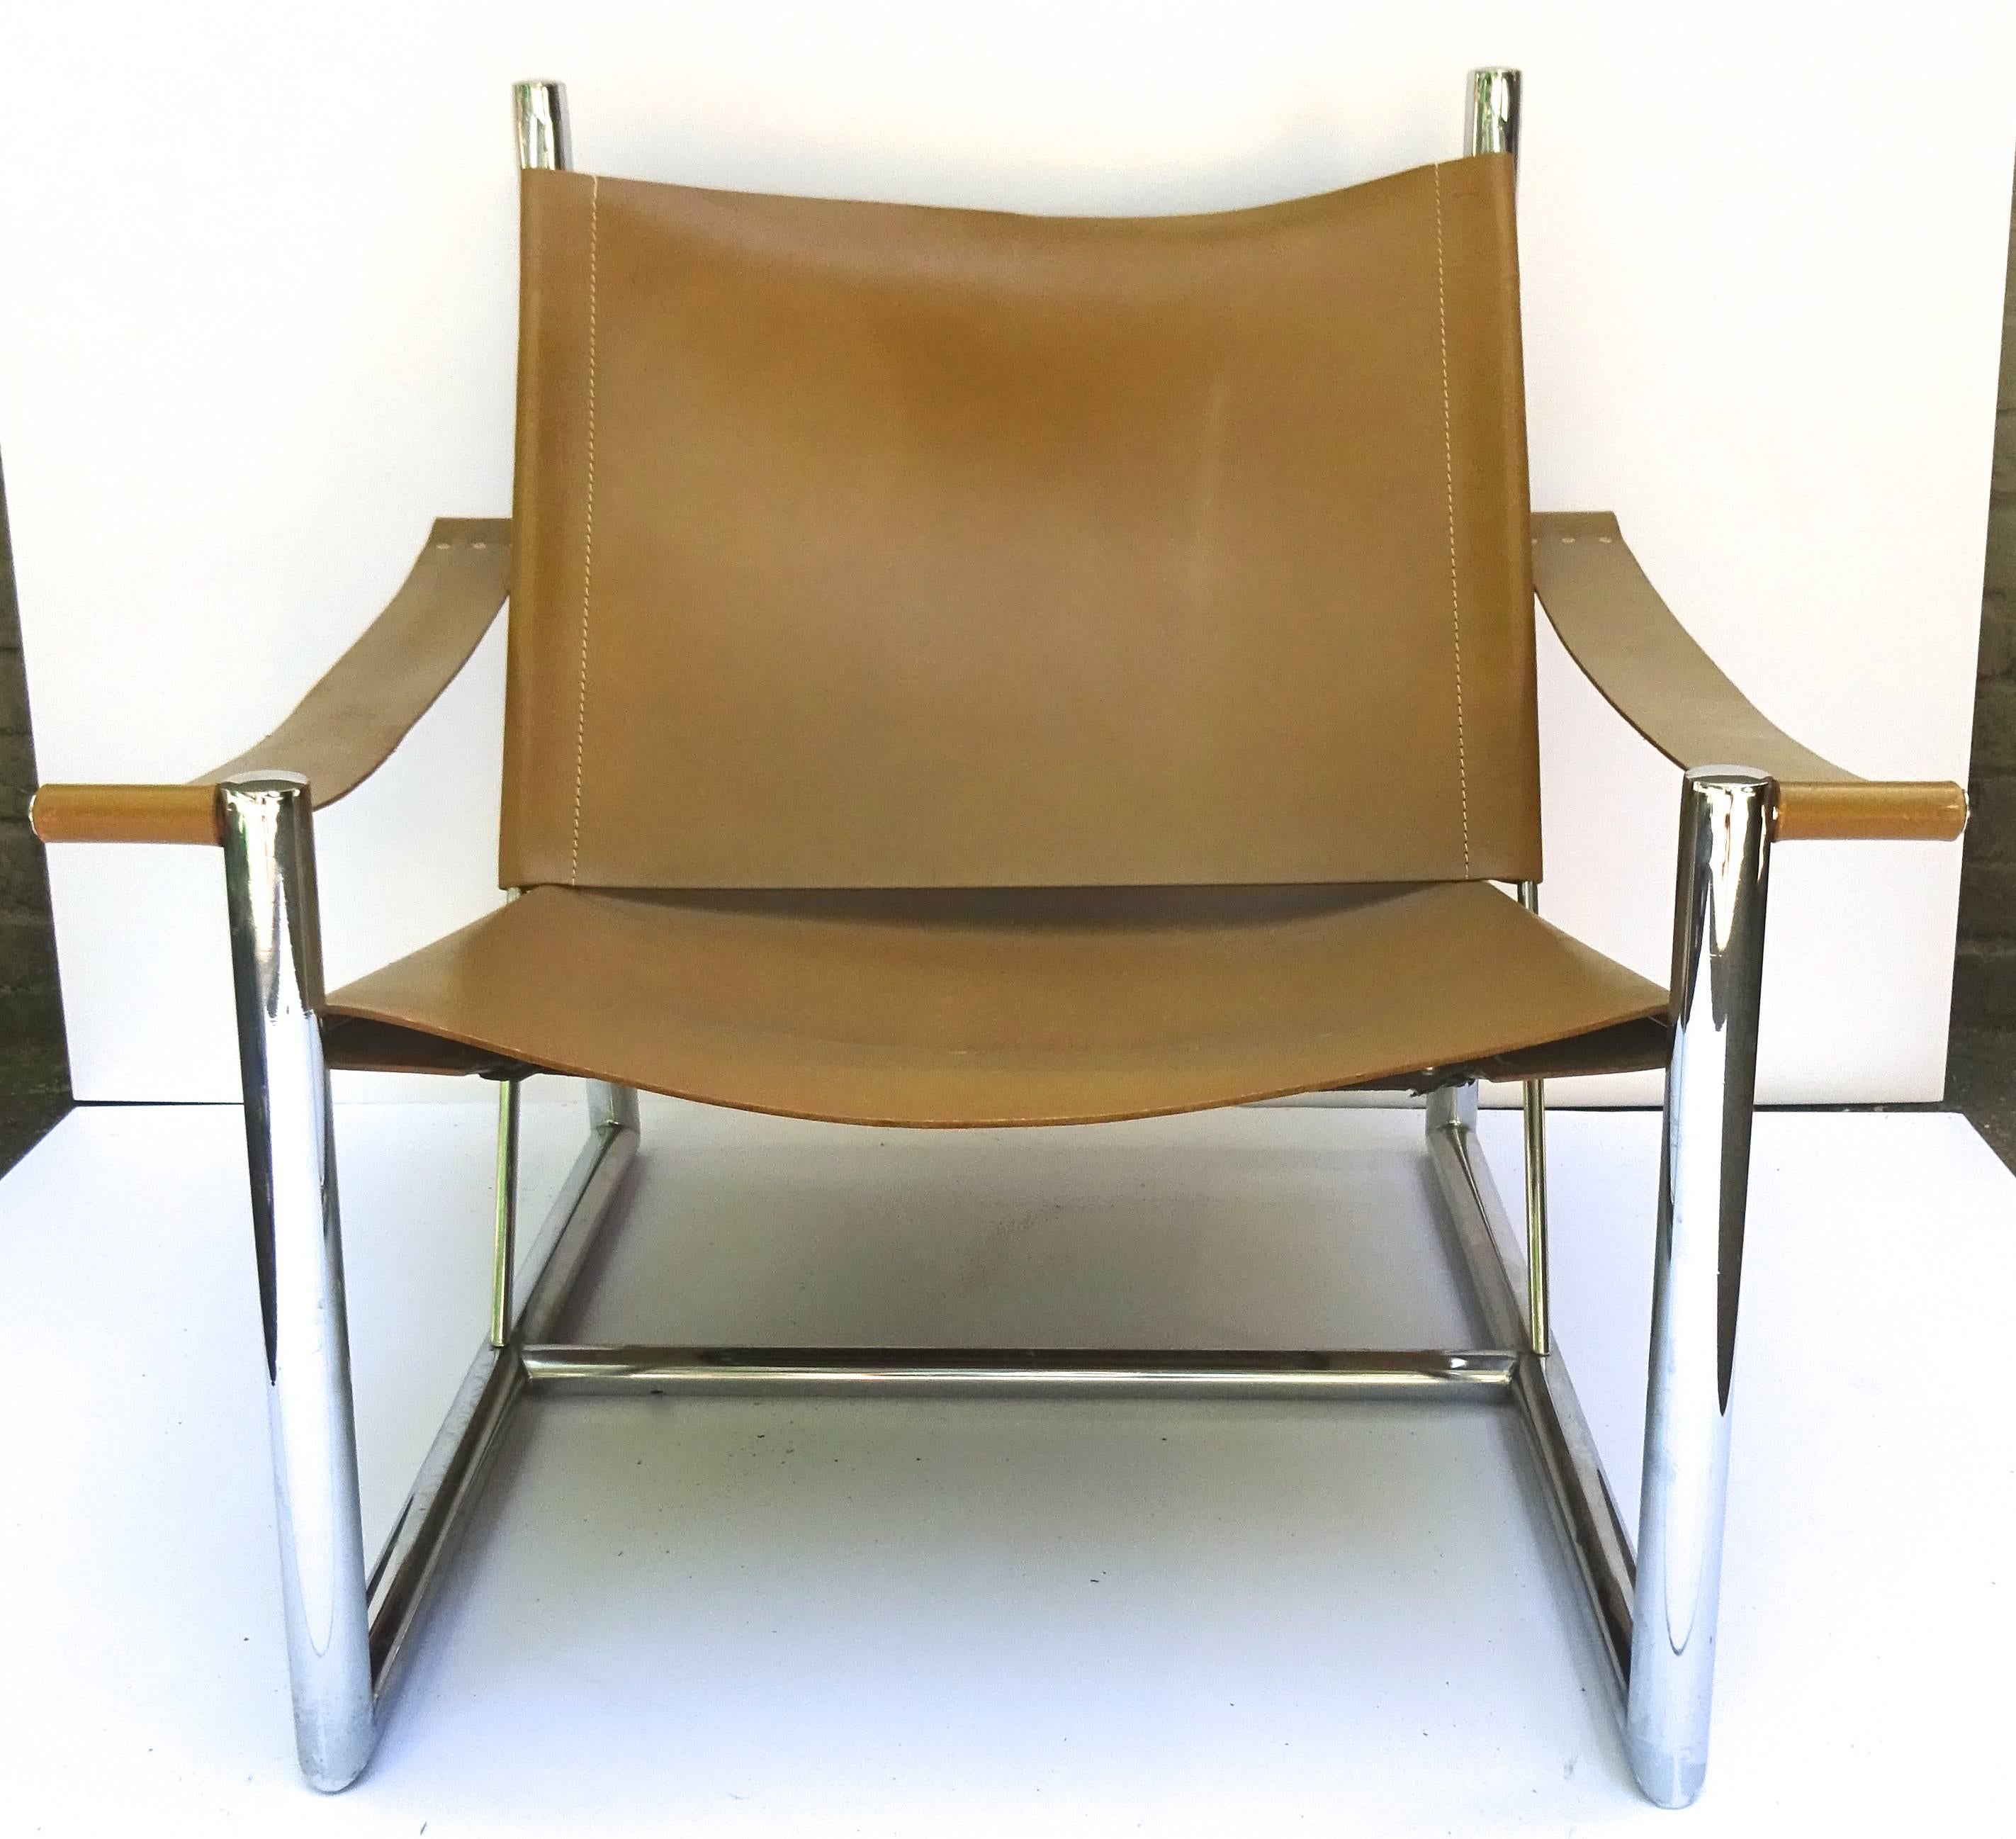 Scarce 1970s Milo Baughman leather and chrome lounge chair.